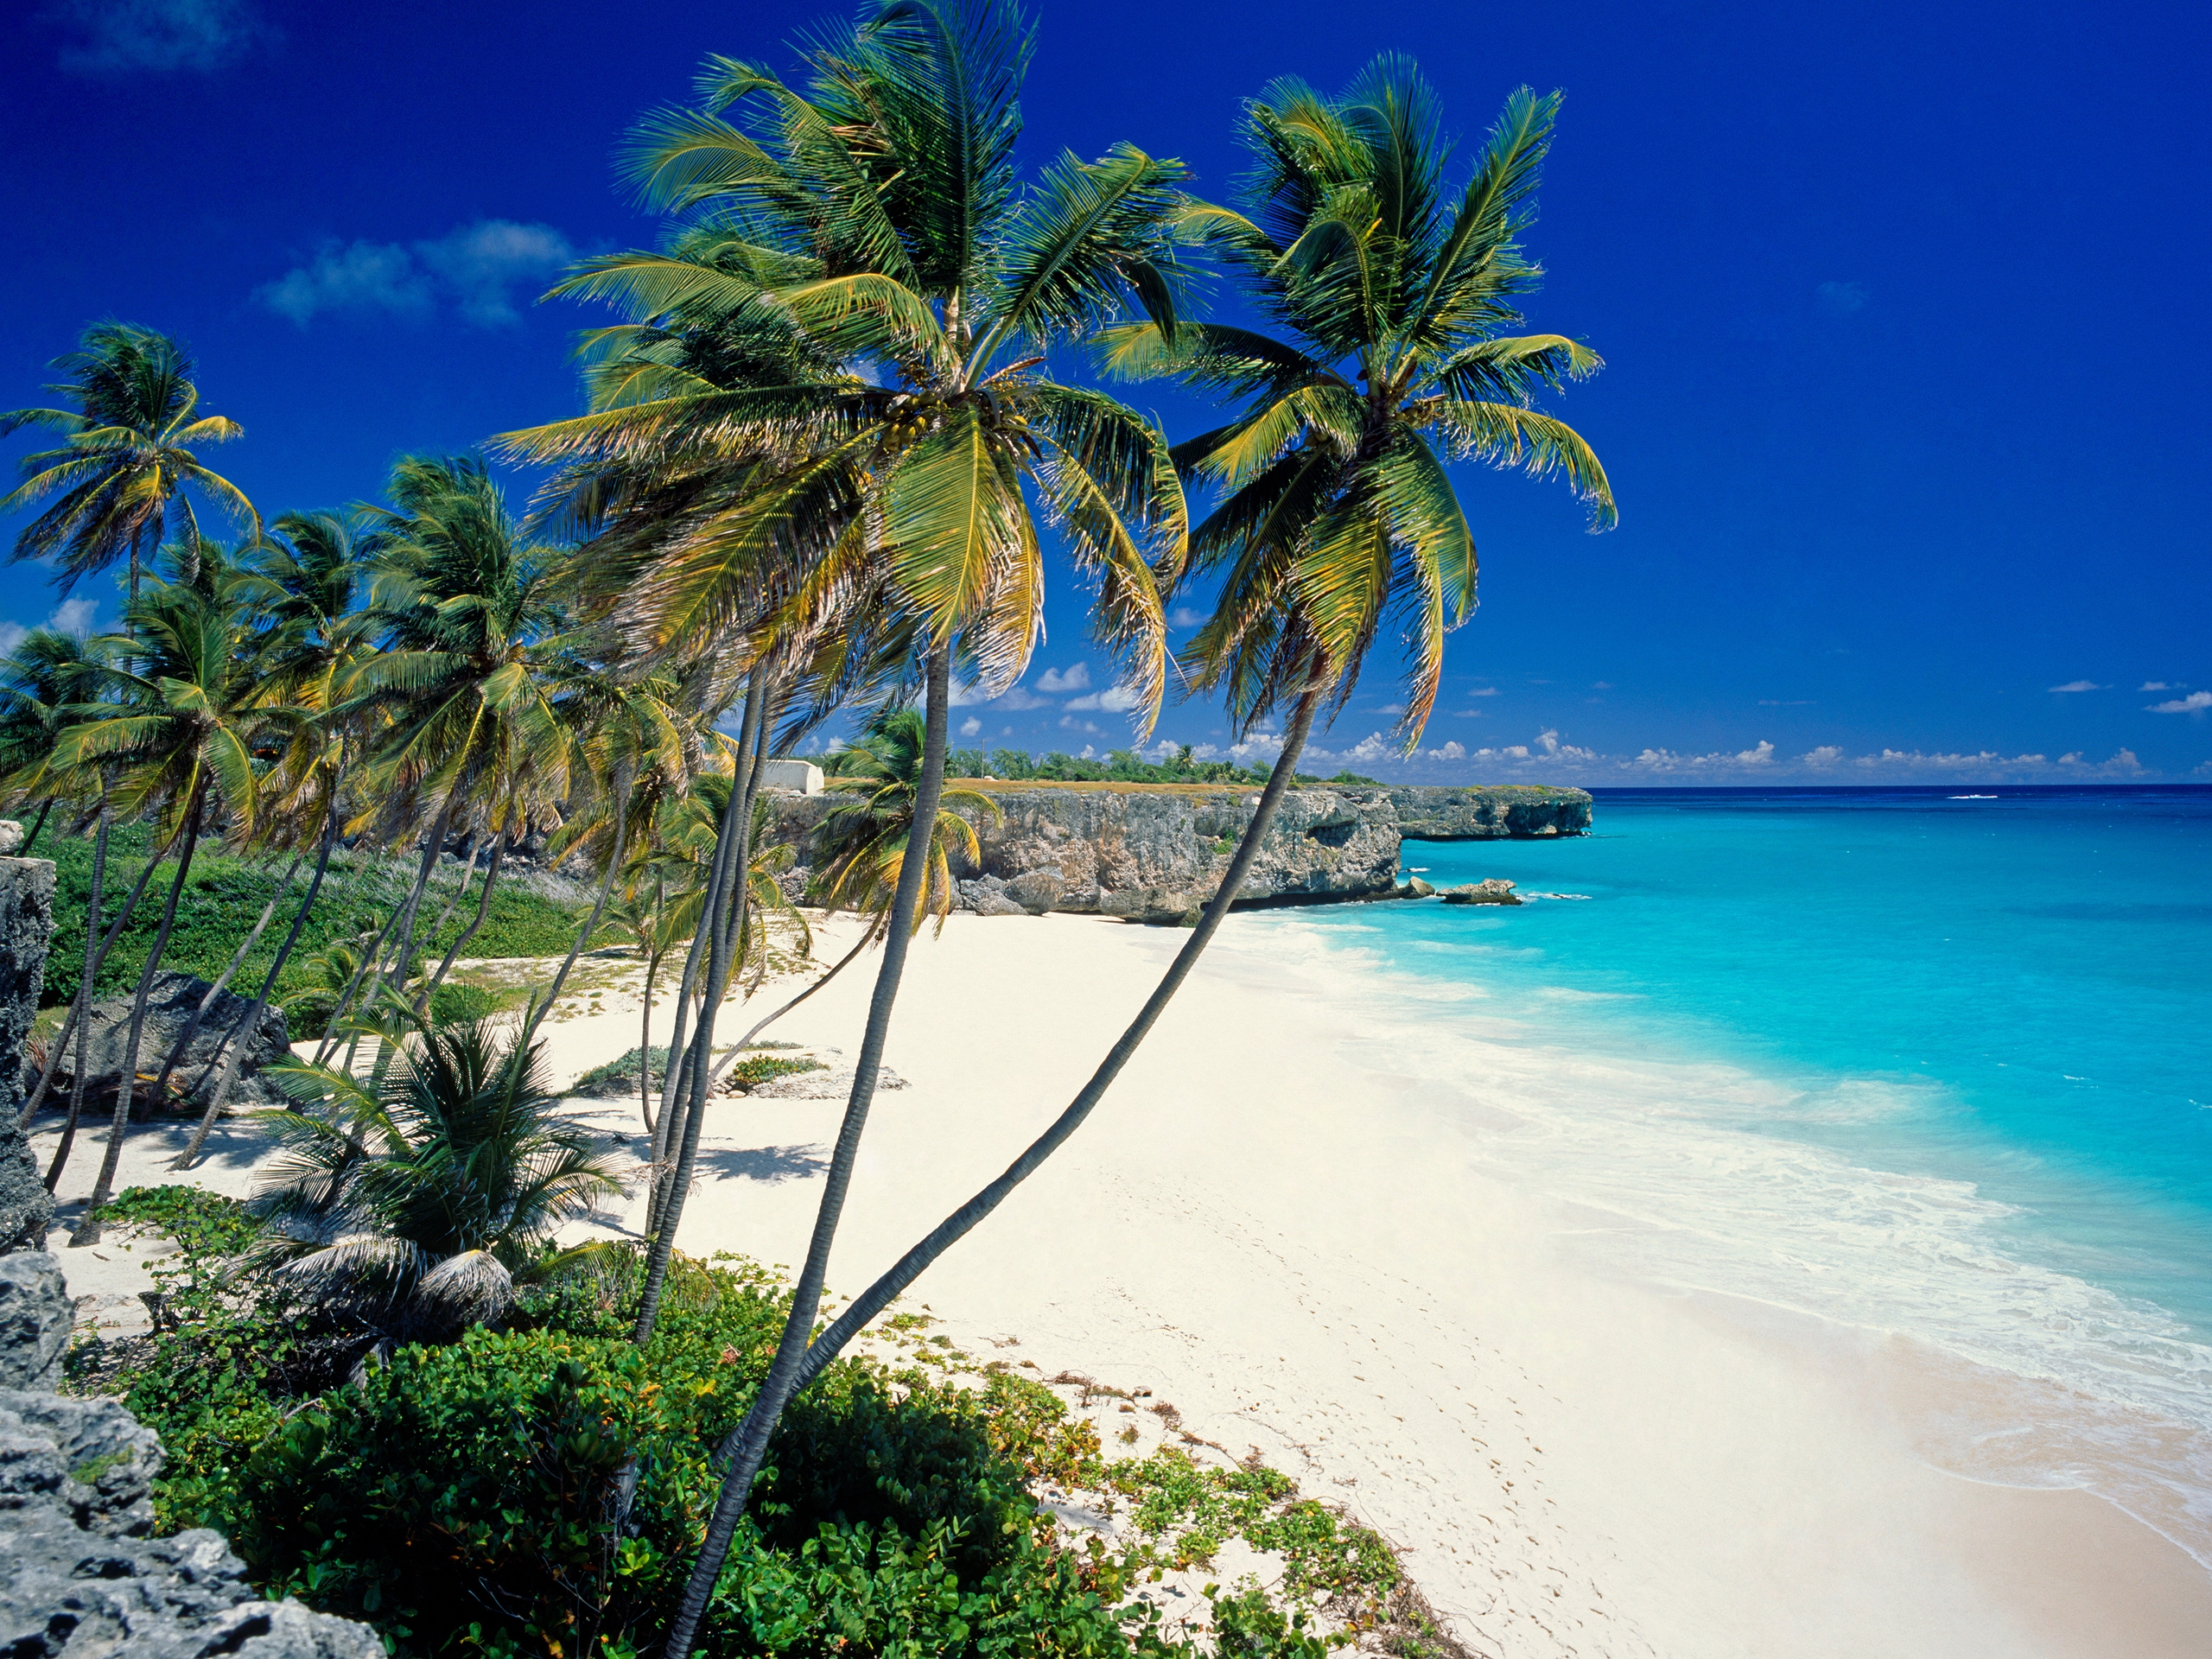 nature, sea, beach, sand, palms, tropics, handsomely, it's beautiful